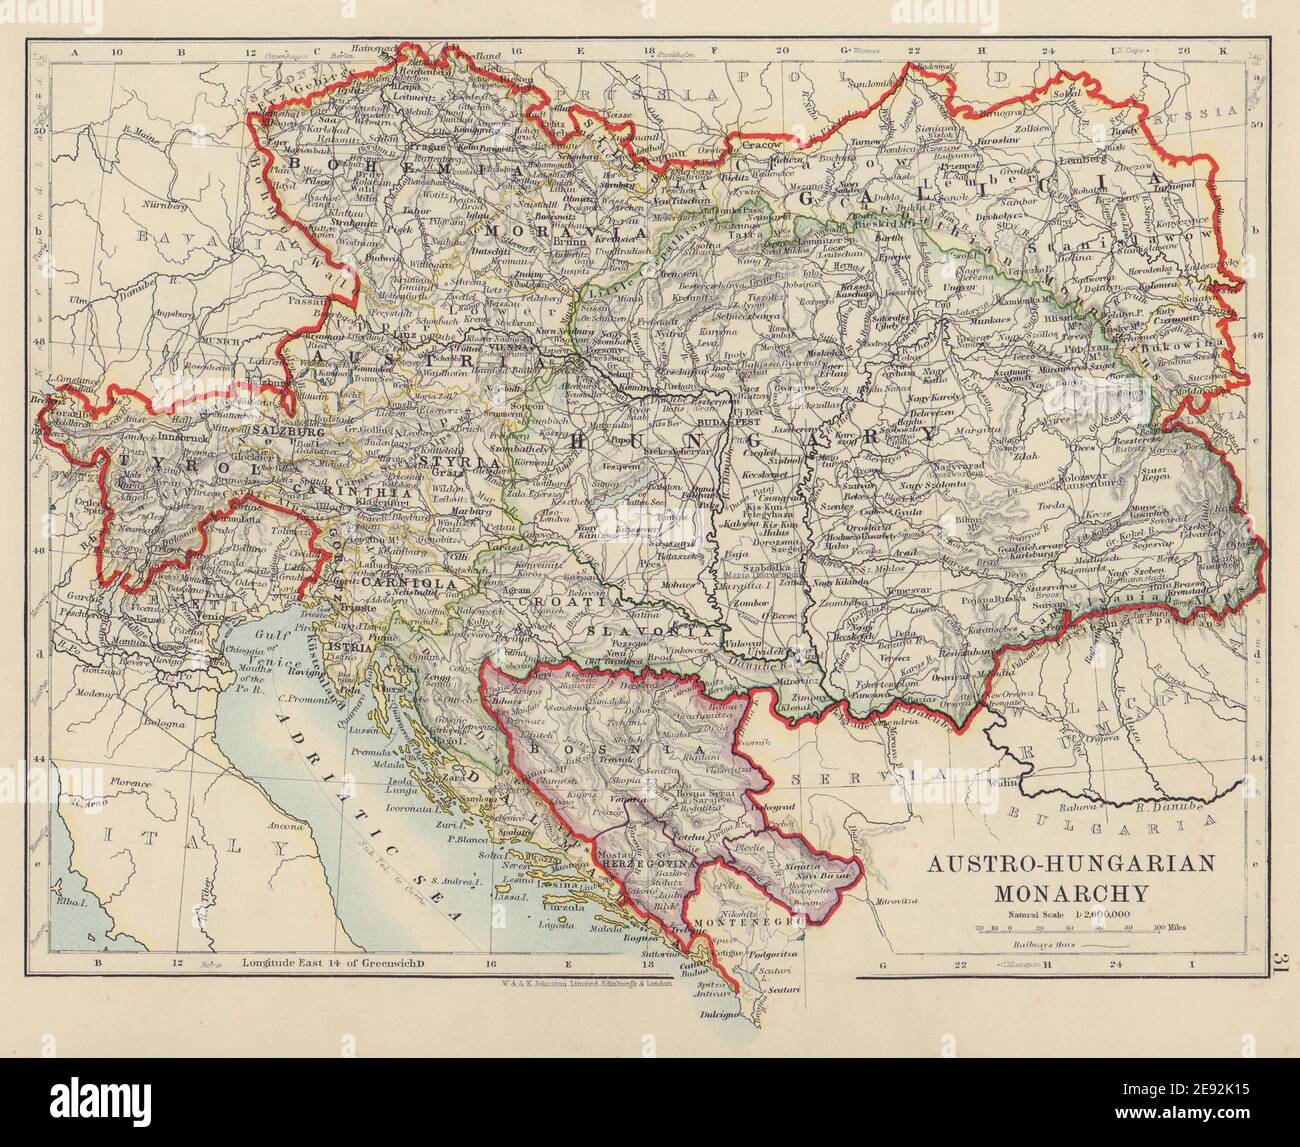 AUSTRO-HUNGARIAN MONARCHY. Dalmatia Slavonia Galicia &c. JOHNSTON 1910 old map Stock Photo